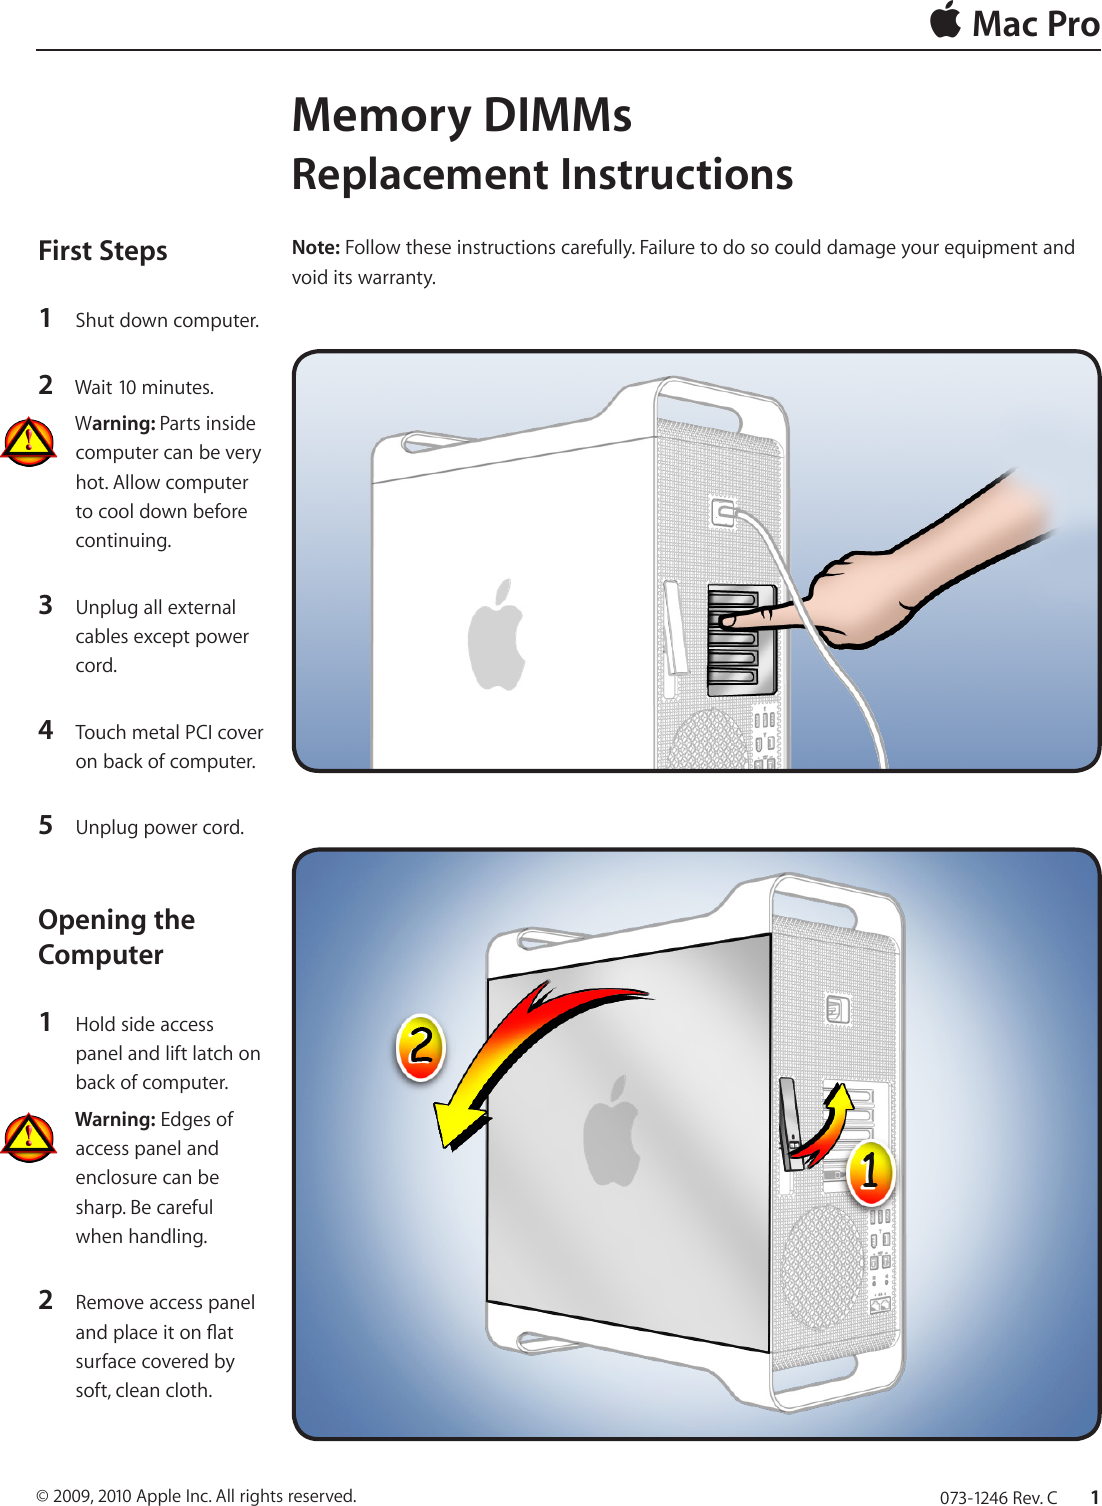 Mac Pro 2009 Service Manual